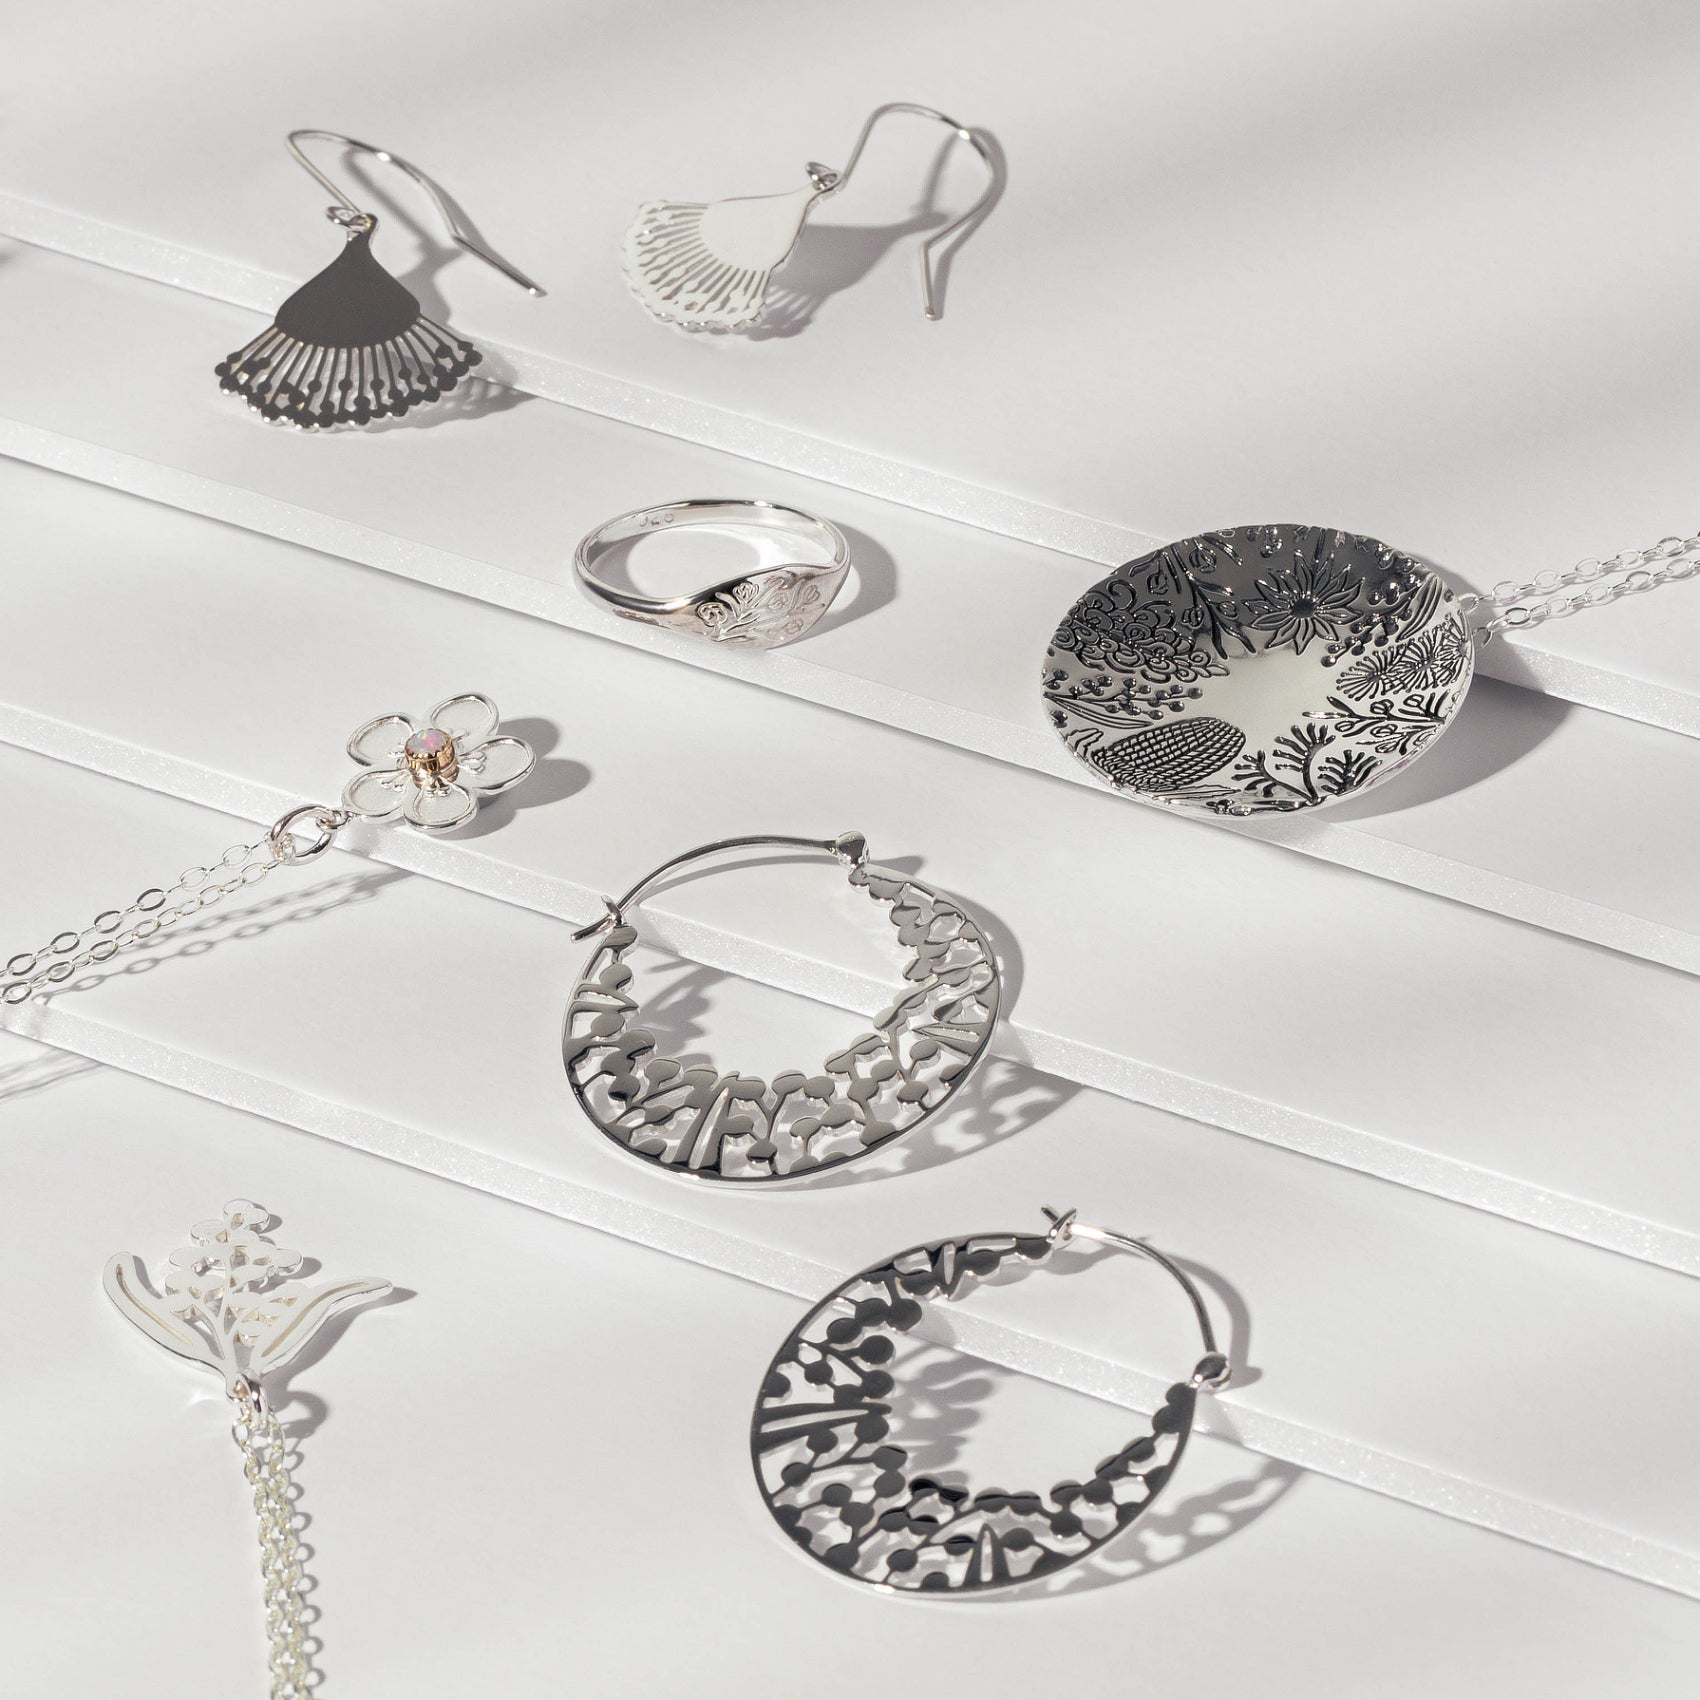 Wattle Branch Silver Pendant Necklace - Simone Walsh Jewellery Australia